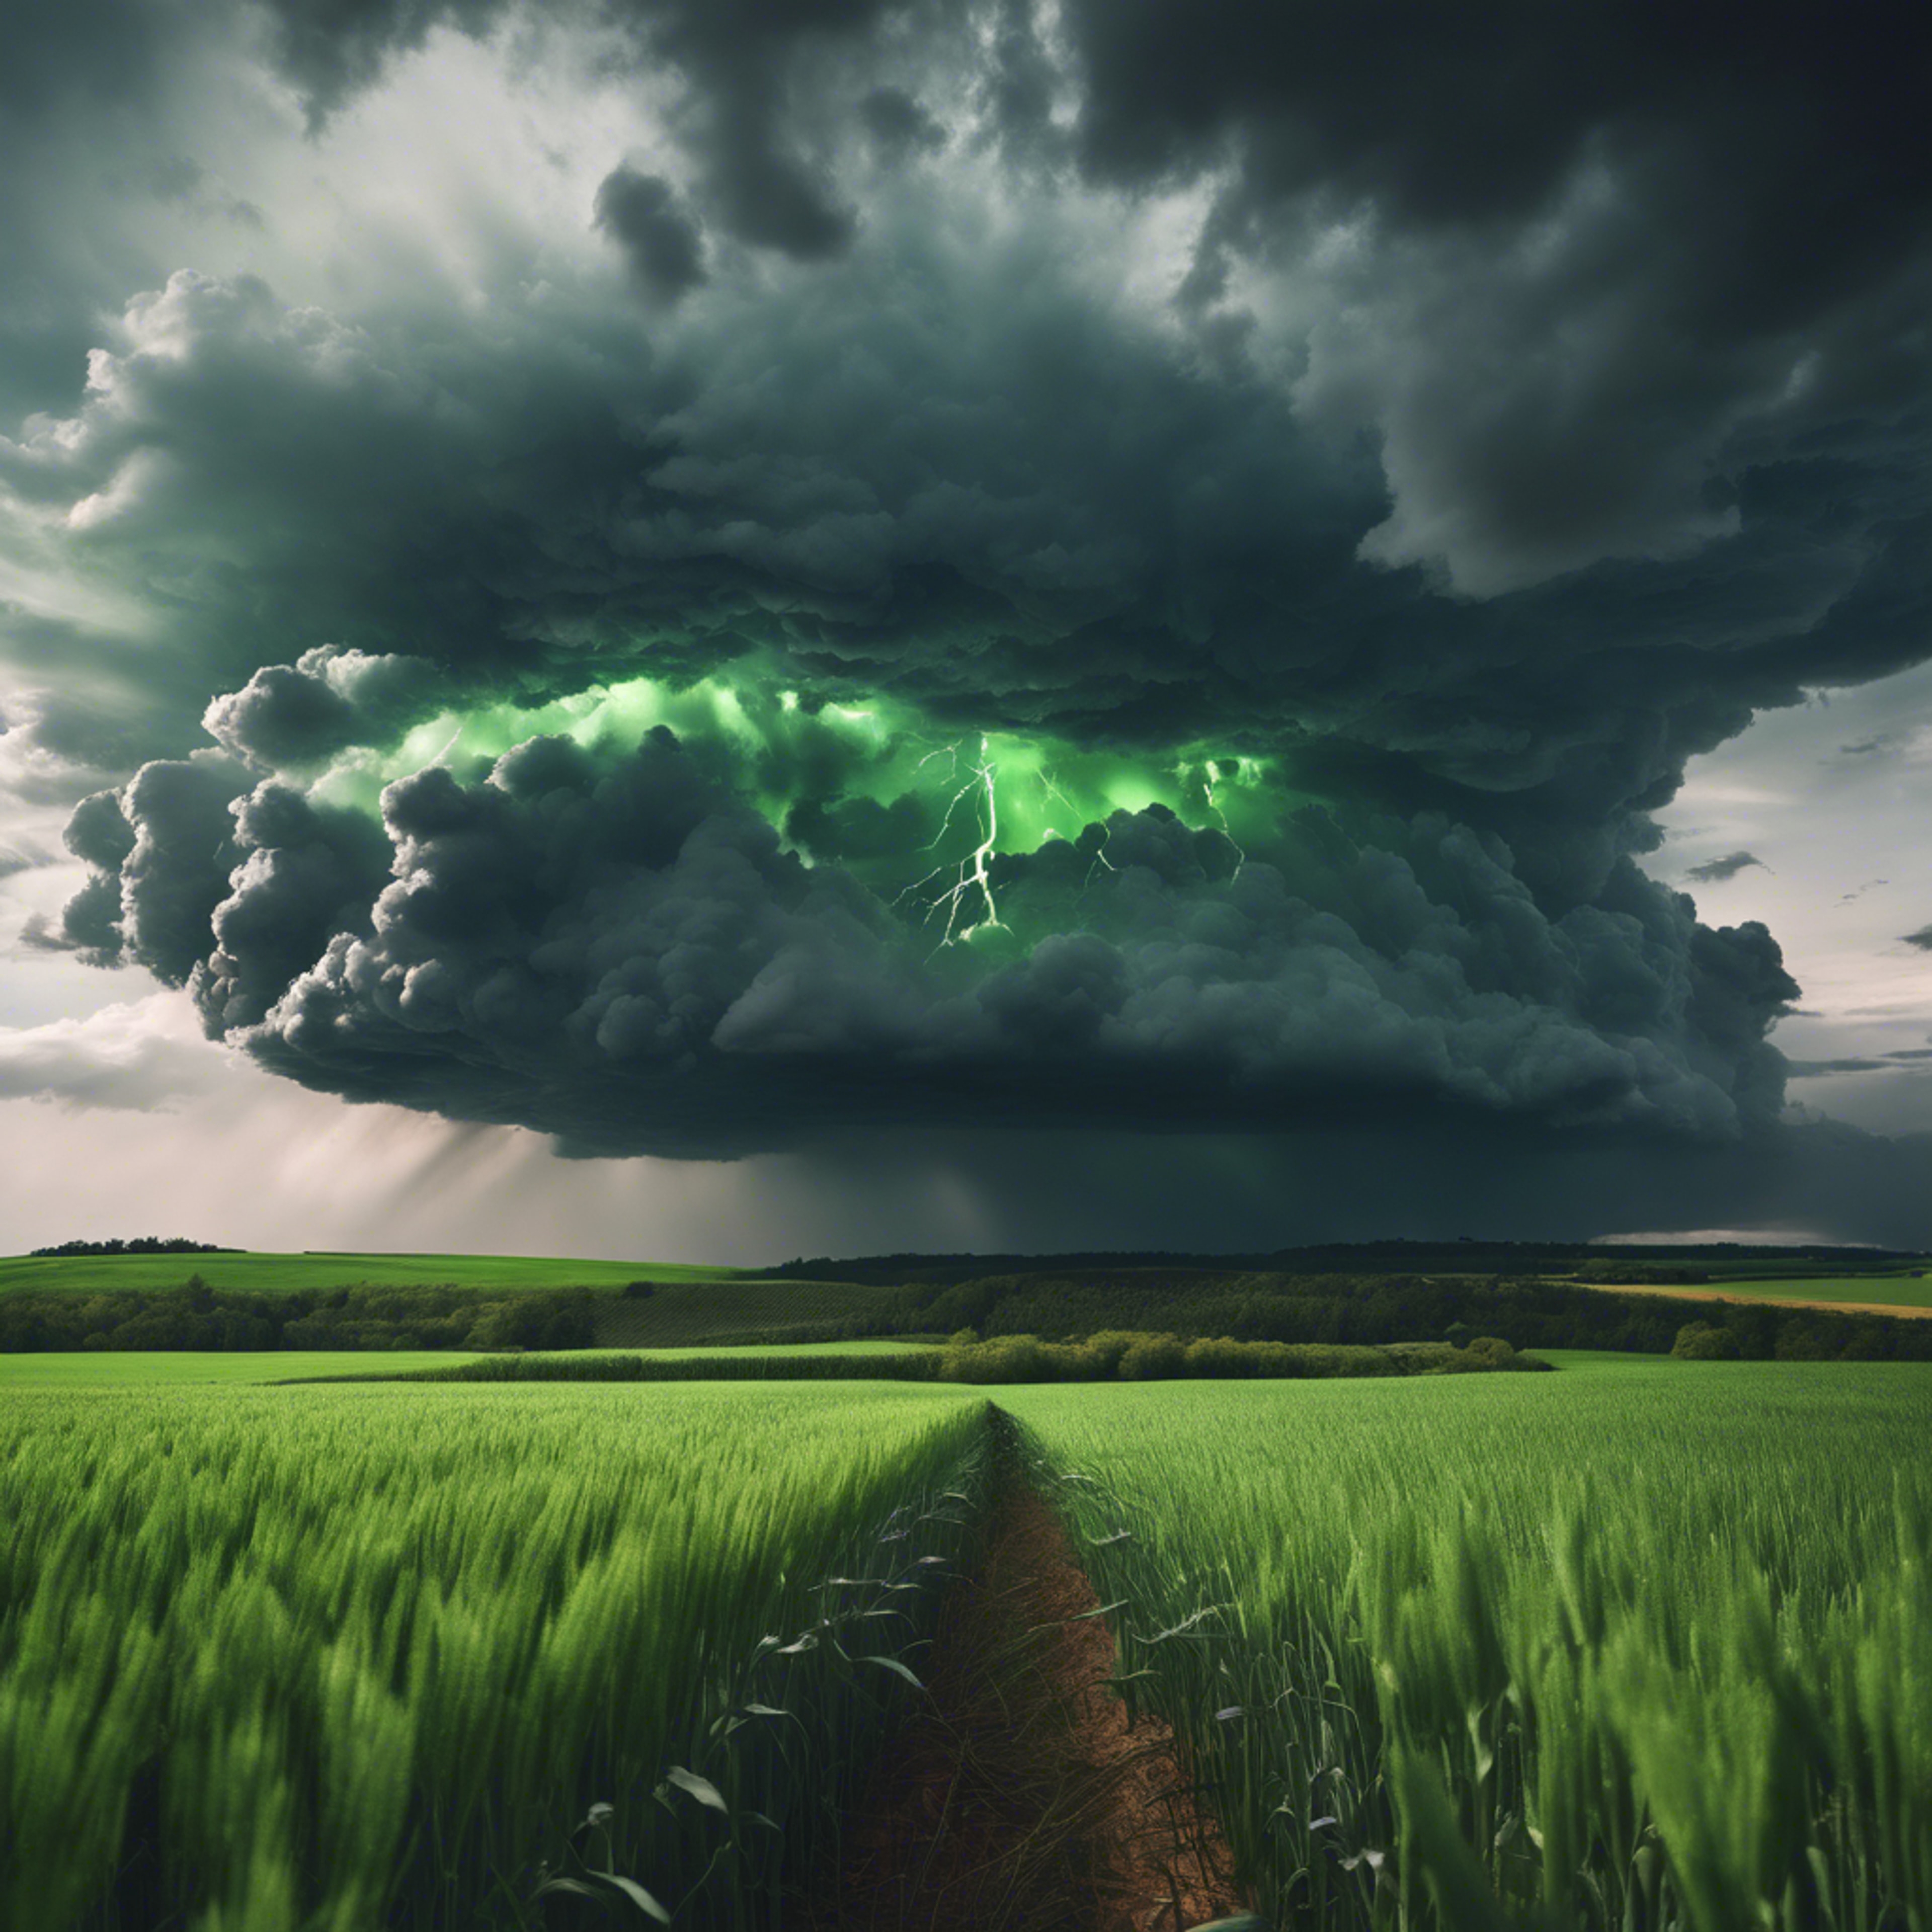 A dramatic black storm cloud over a vibrant green wheat field. Tapeta[2ef08a34070042519f8d]